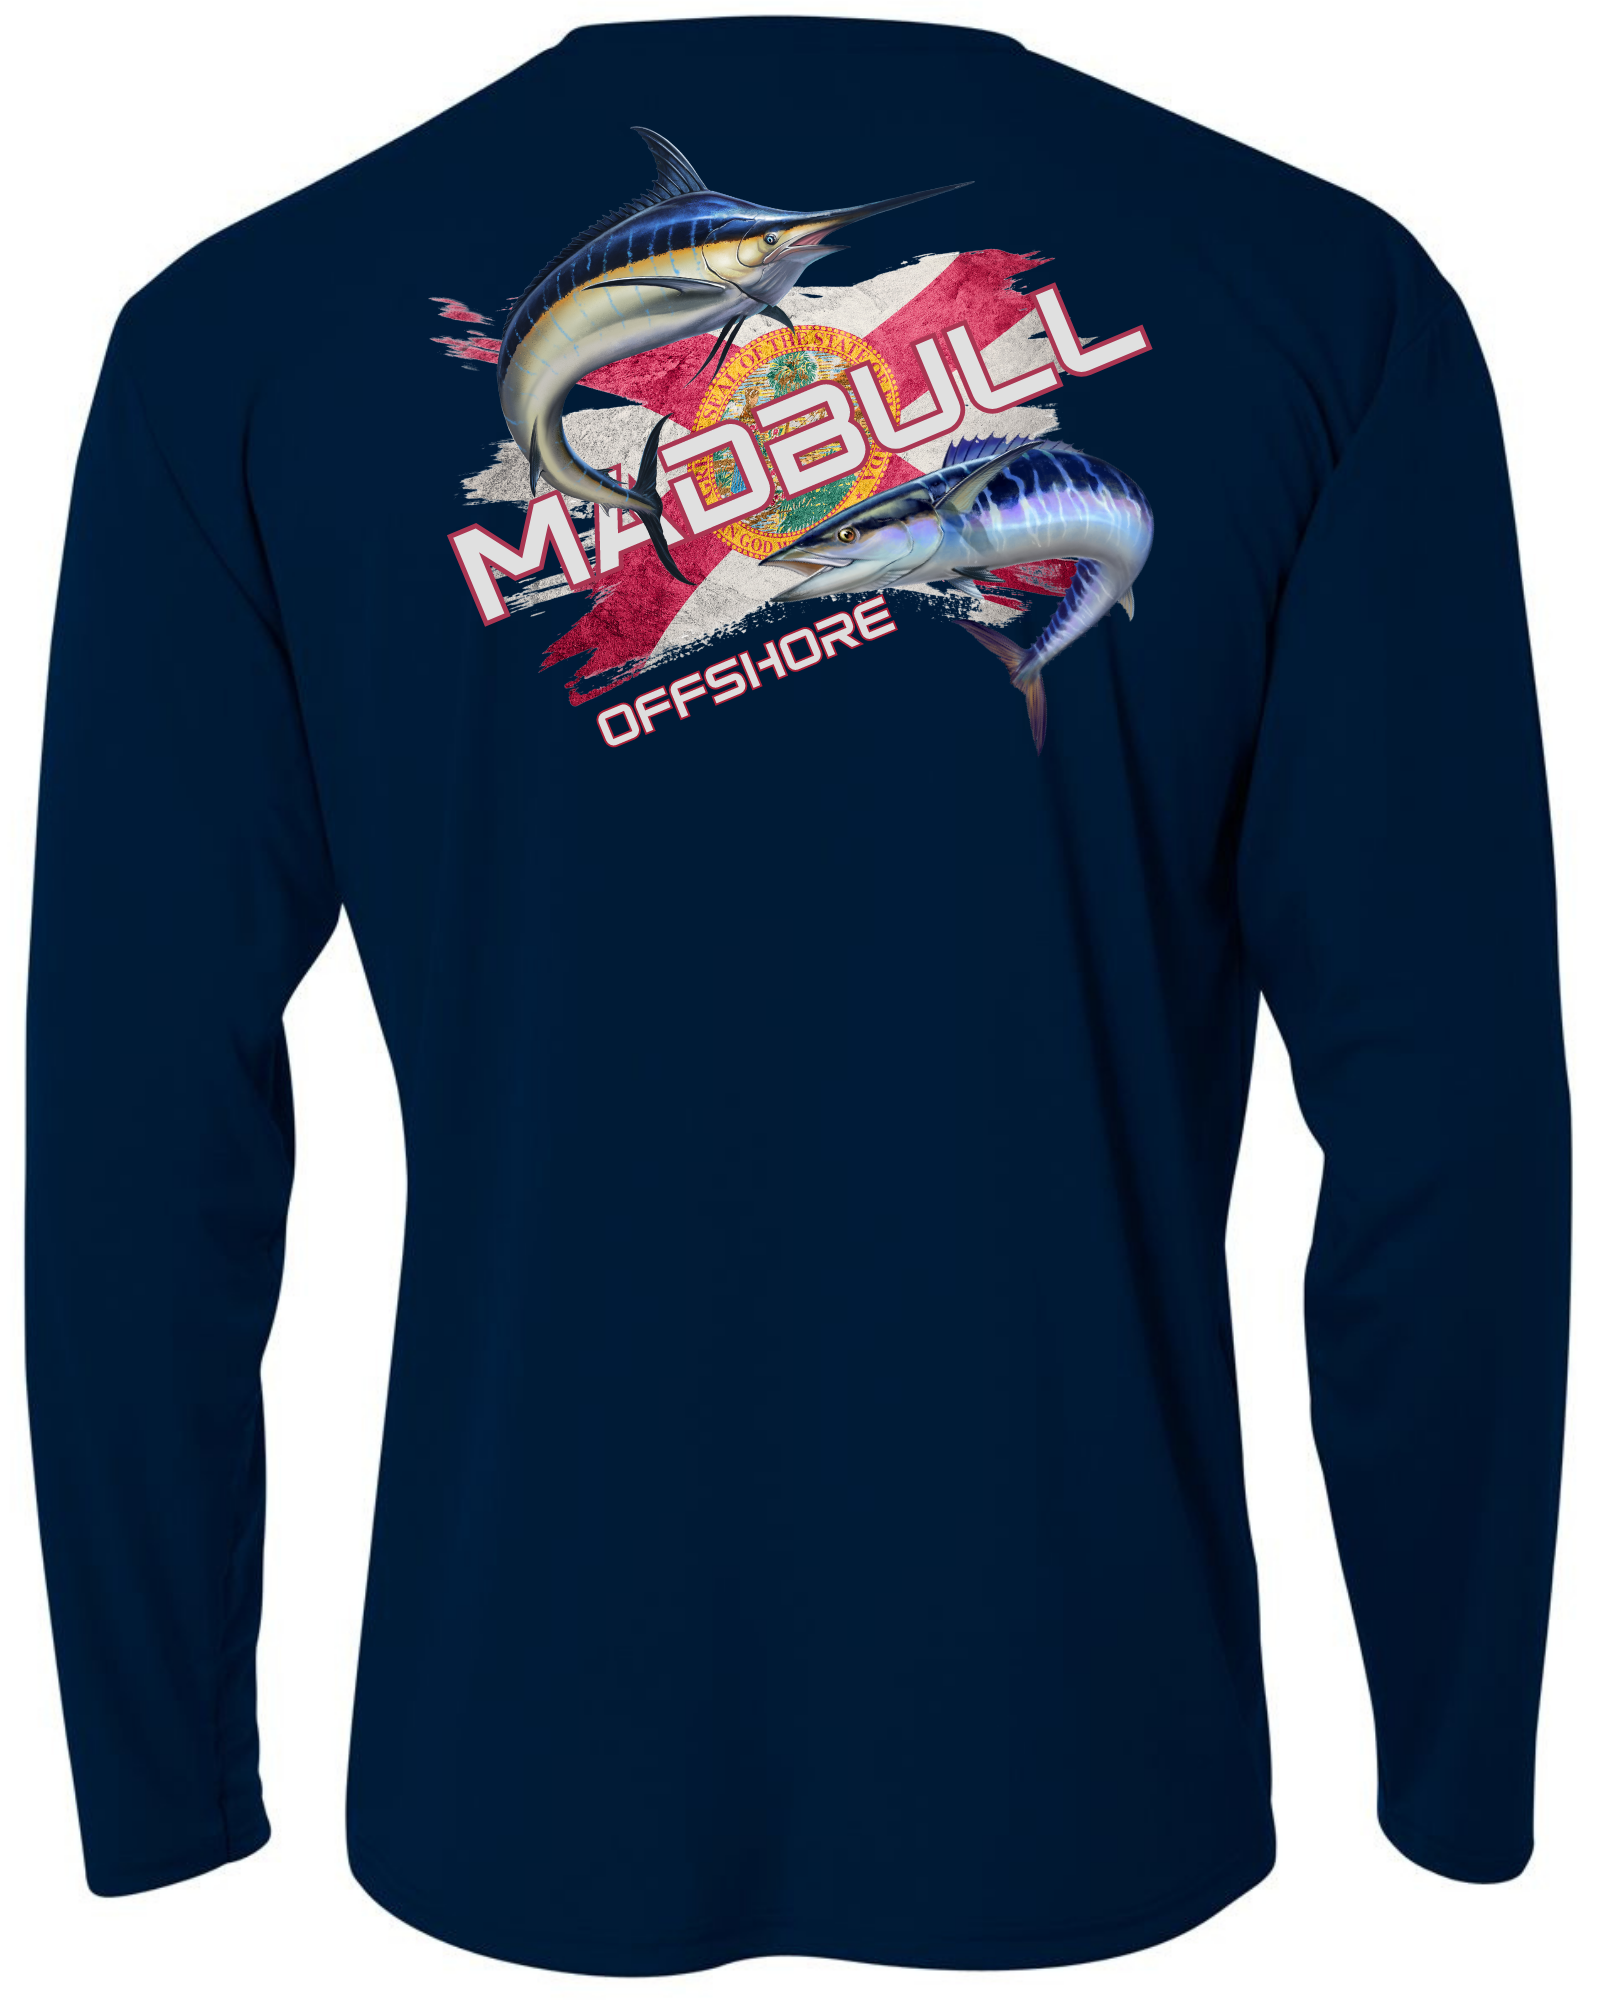 MadBull Florida Anglers Performance Fishing Shirt – MadBull Offshore